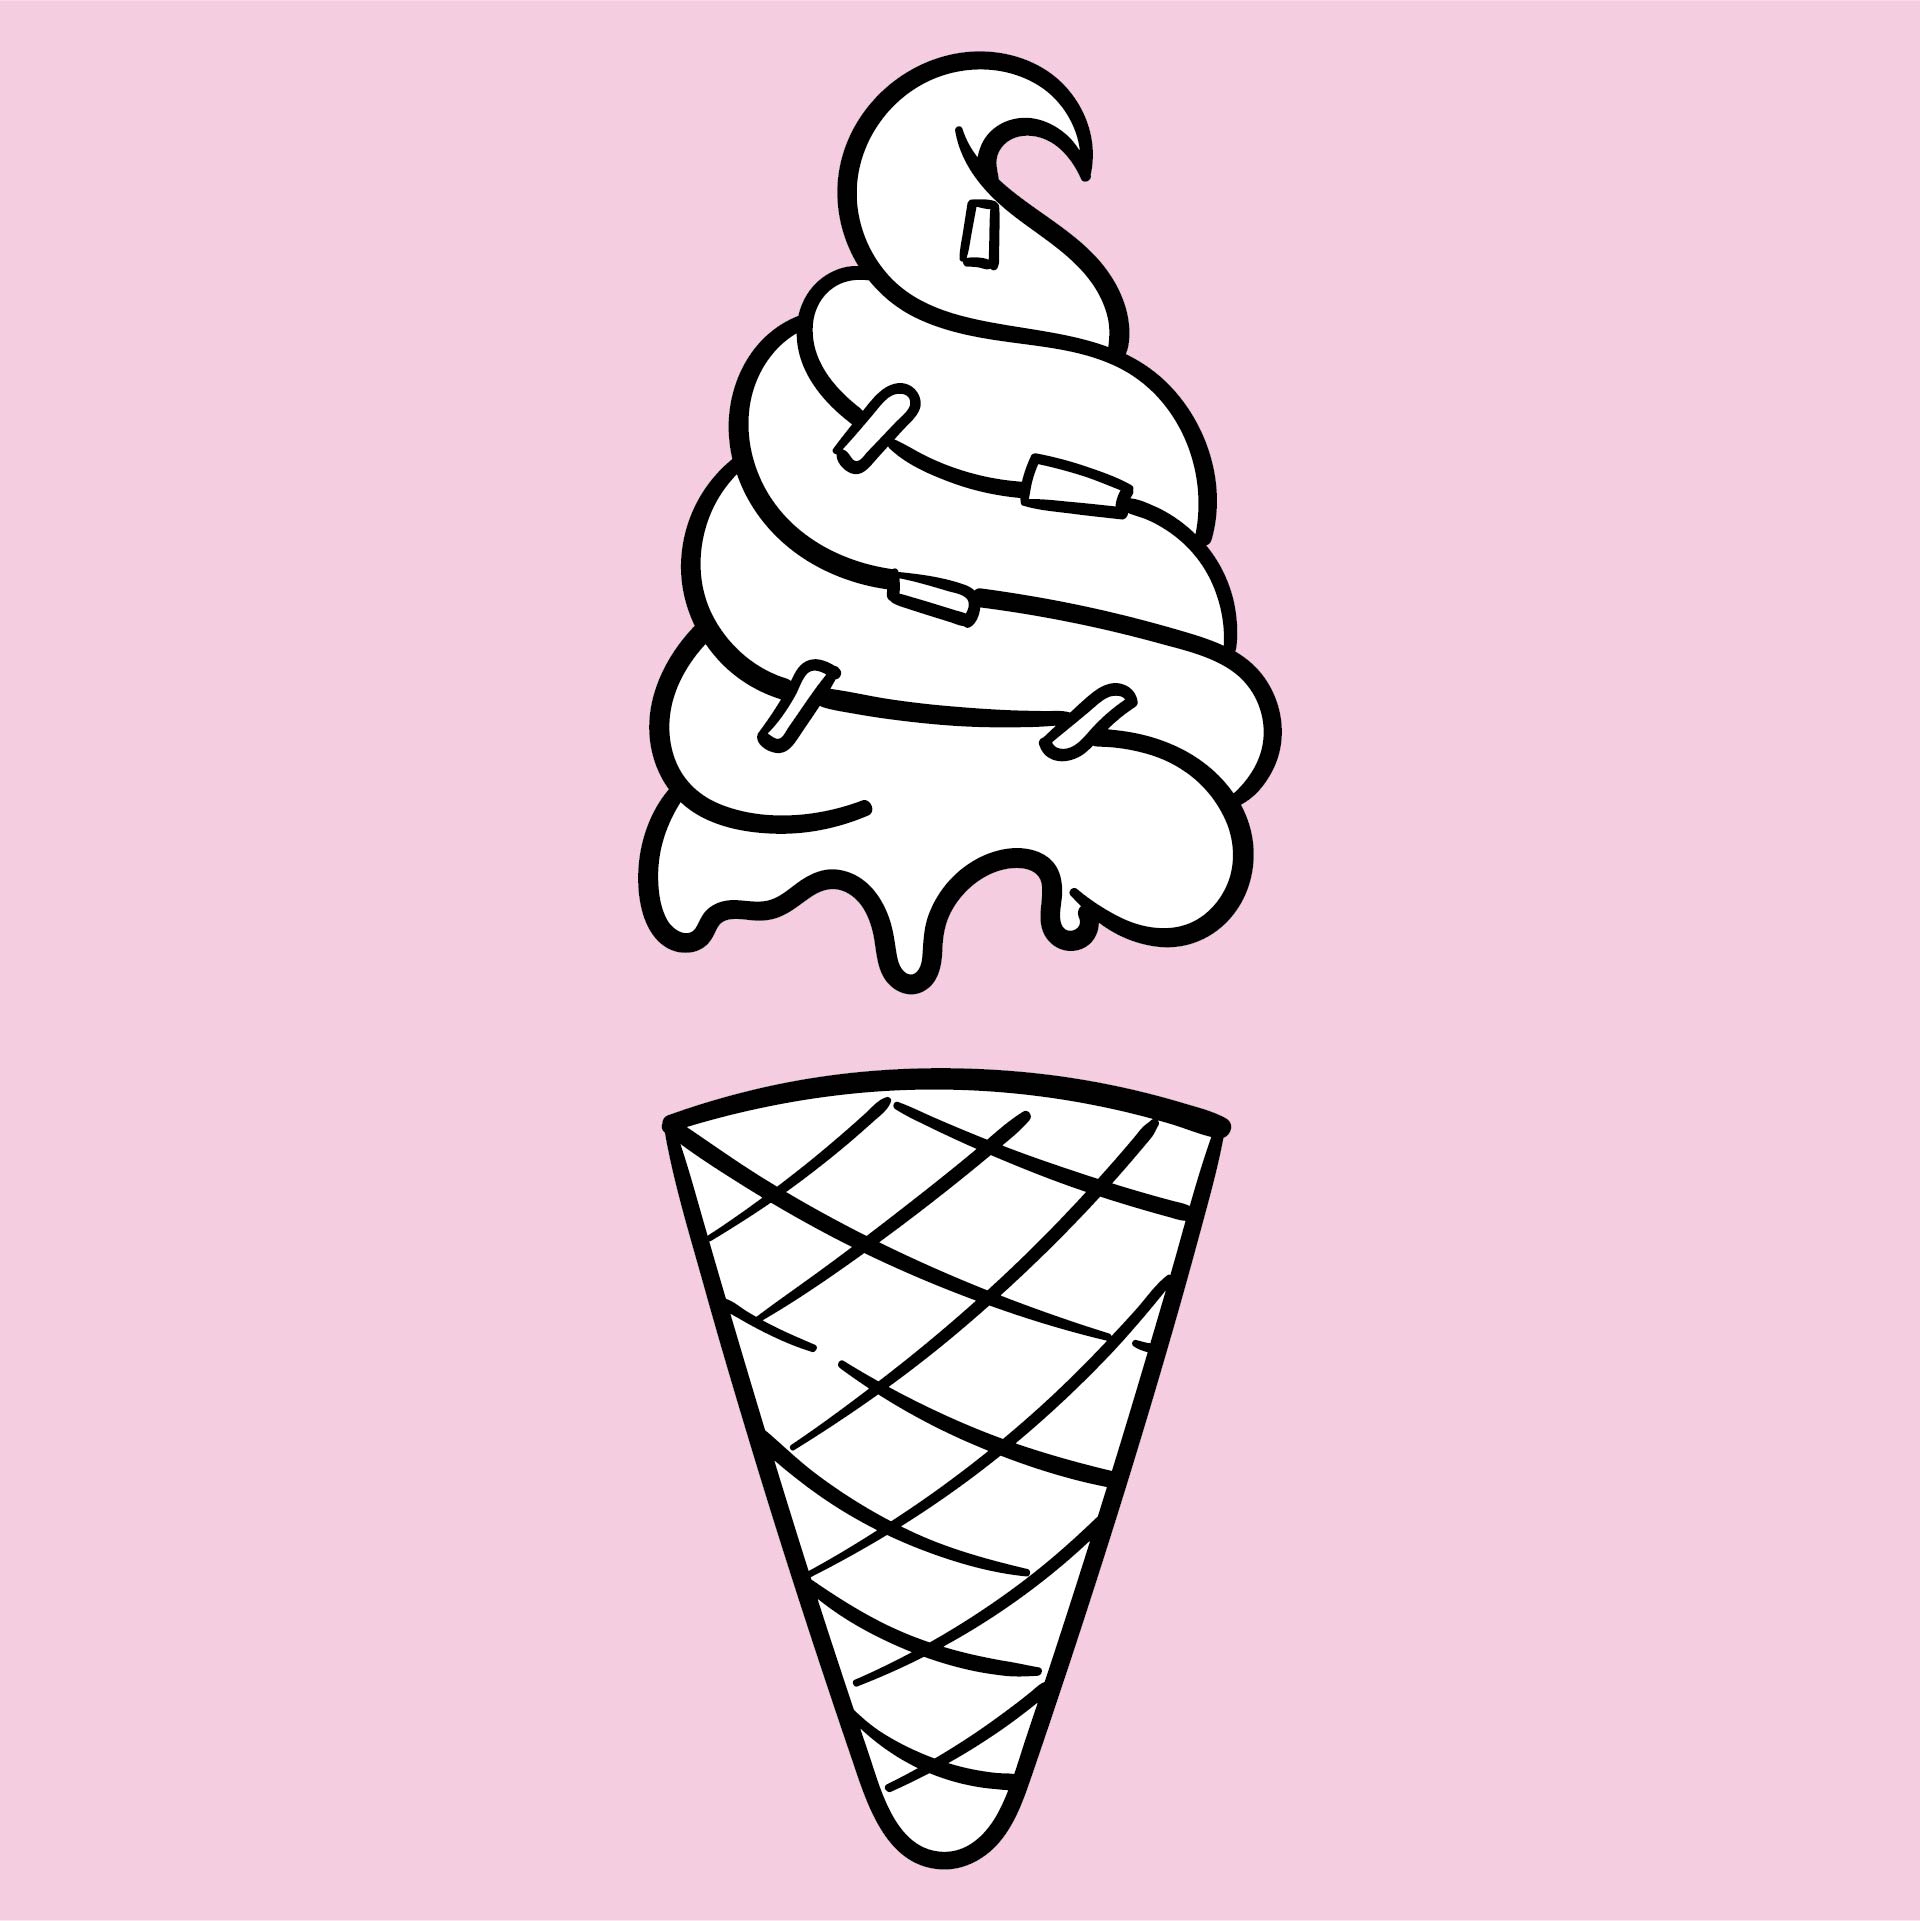 6-best-images-of-ice-cream-cone-pattern-printable-ice-cream-cone